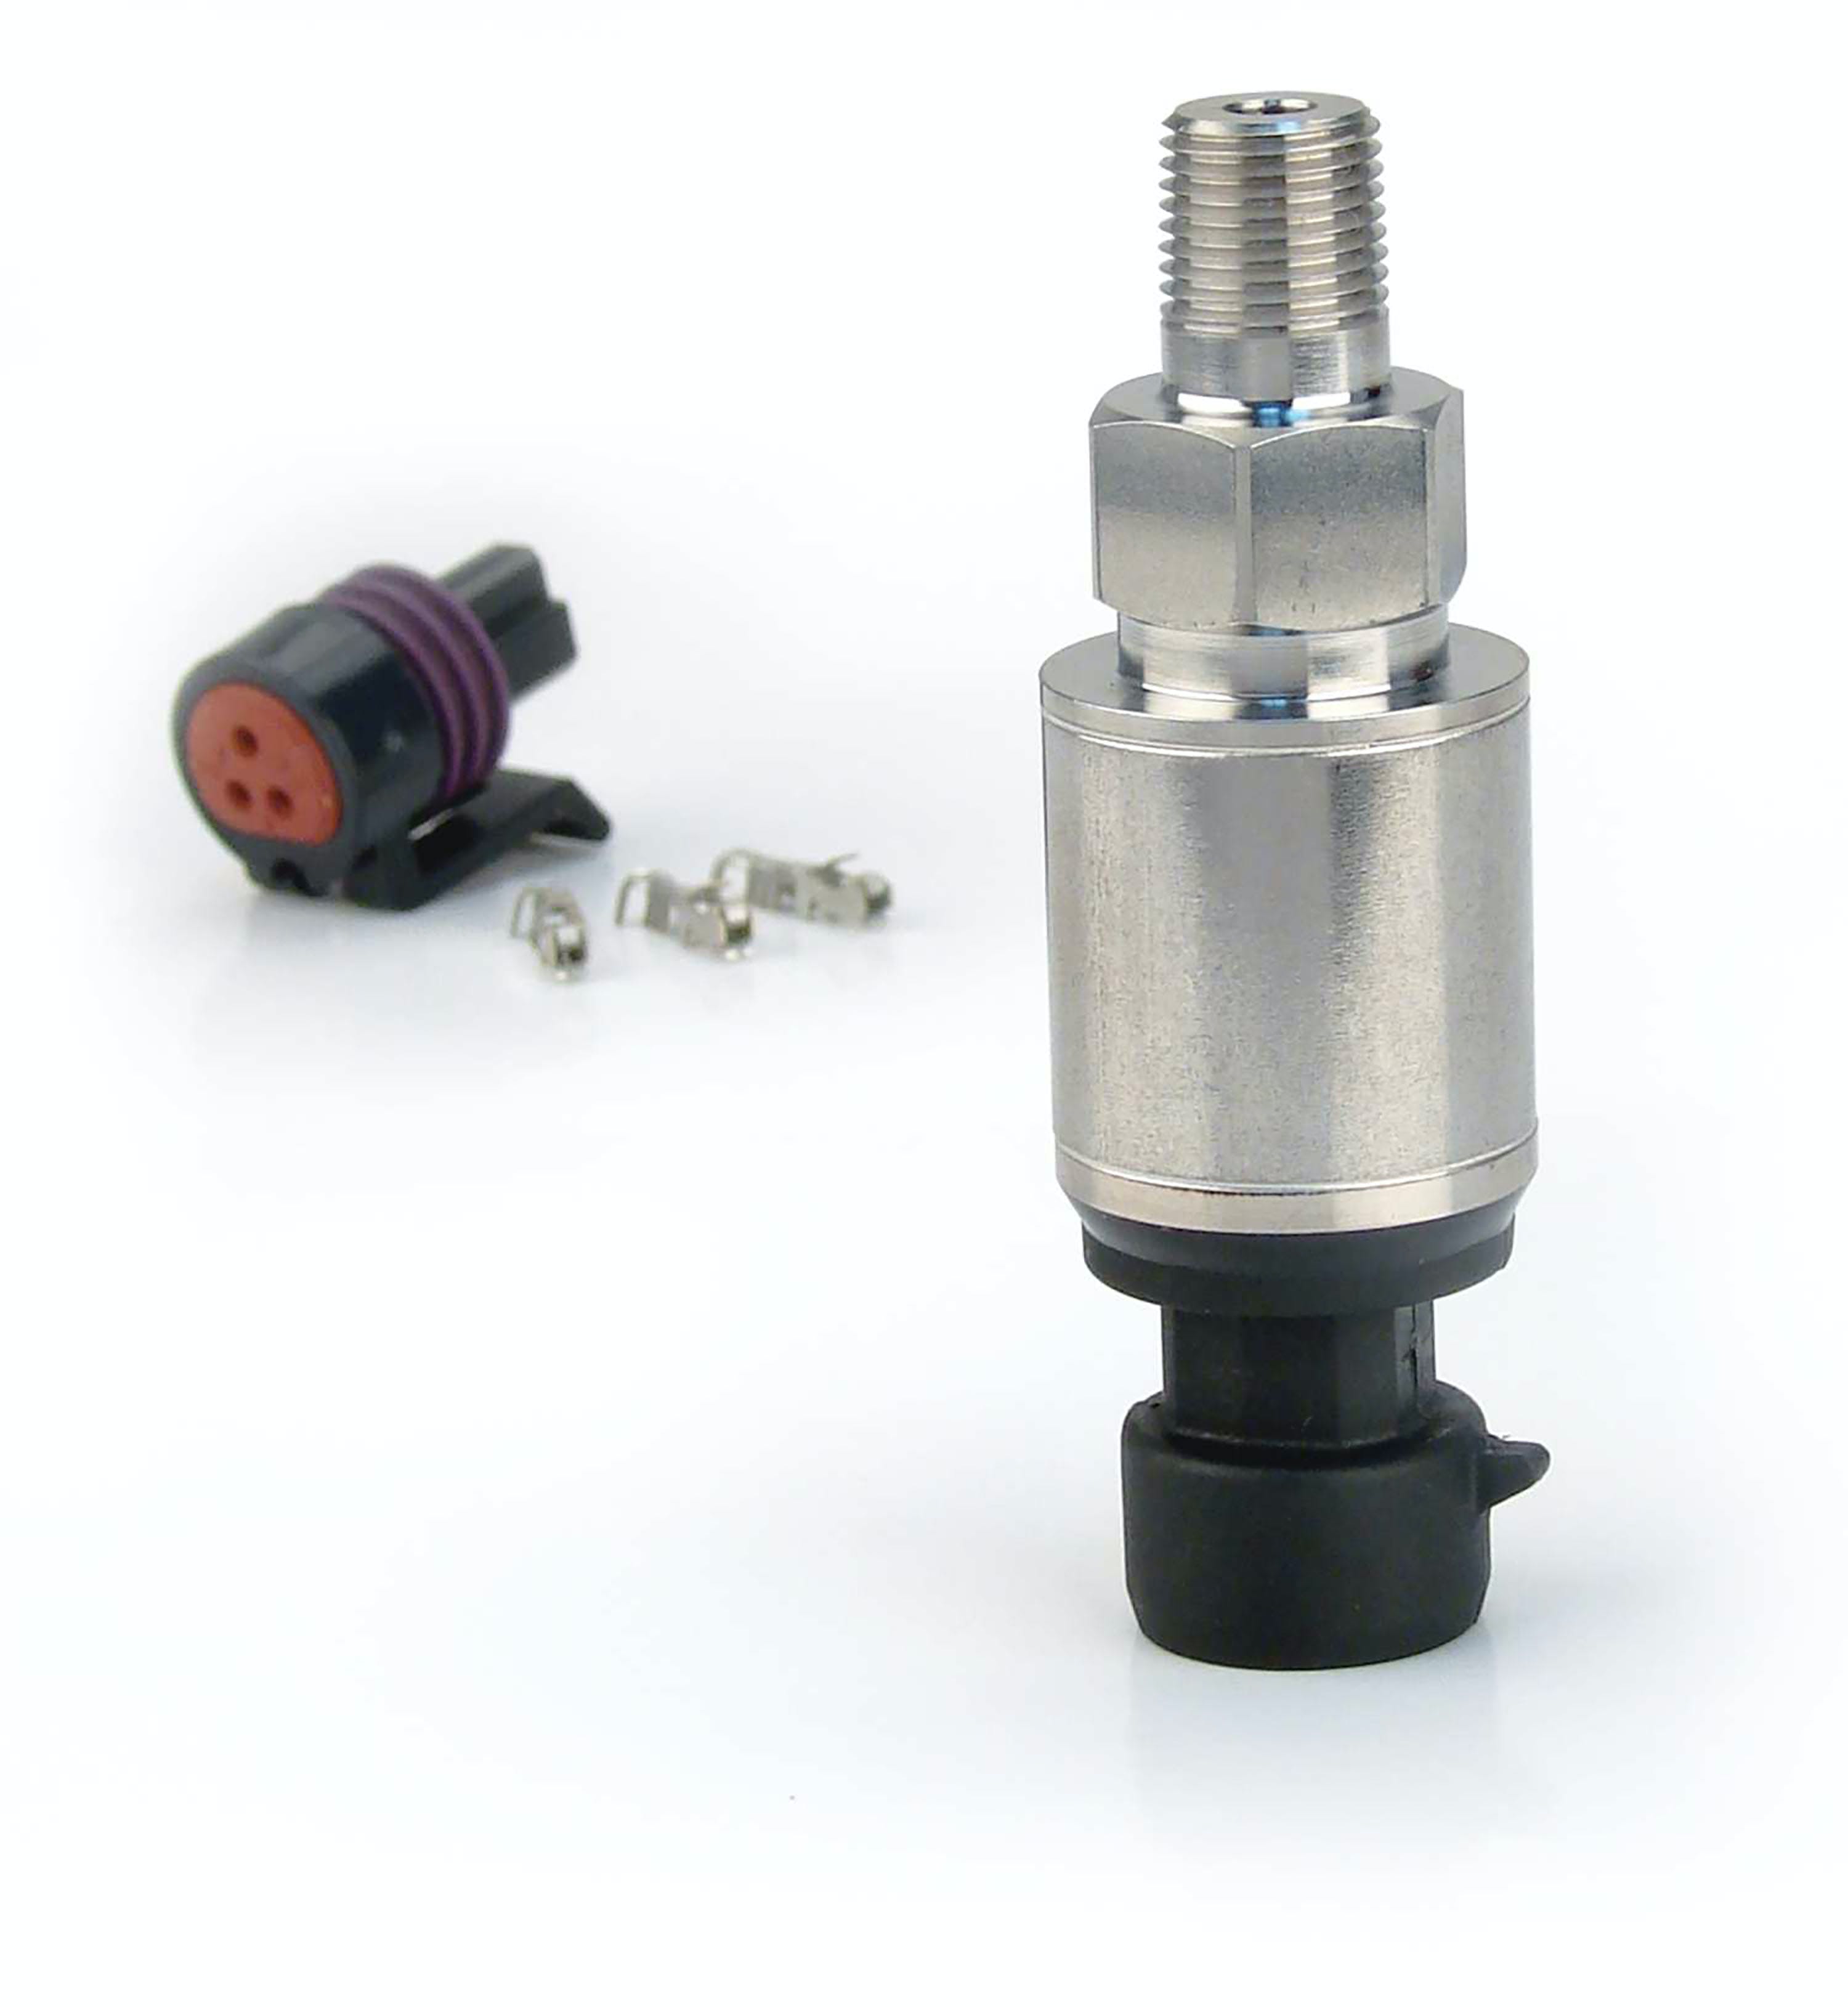 FAST - Fuel Air Spark Technology 307063 Single Pressure Sensor Kit 0 to 200 PSI